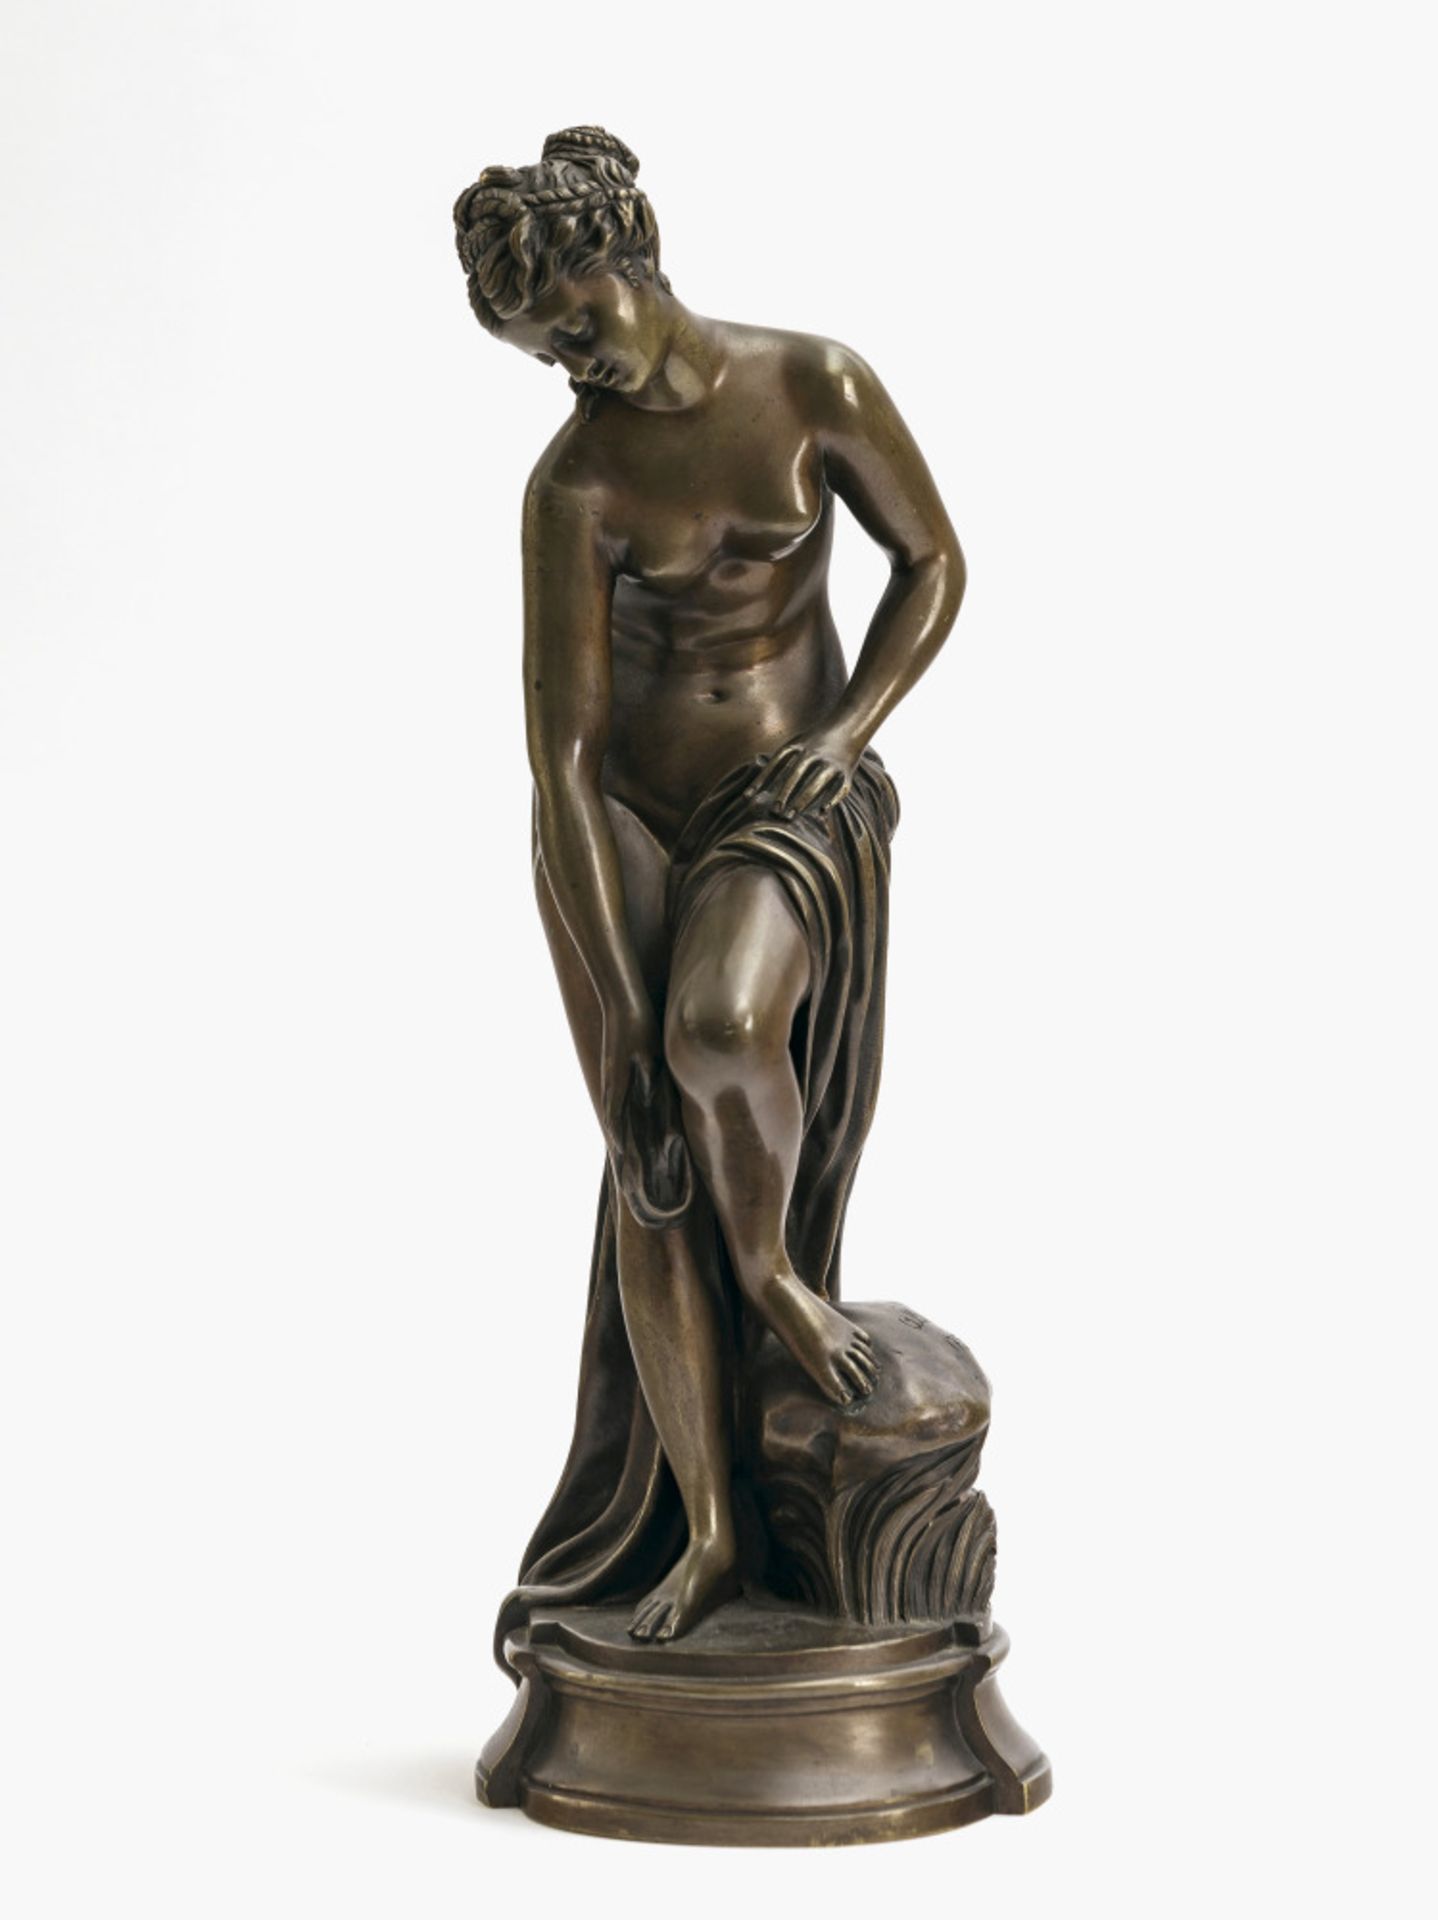 Bathing woman - Later cast after Christophe-Gabriel Allegrain (1710-1795) 